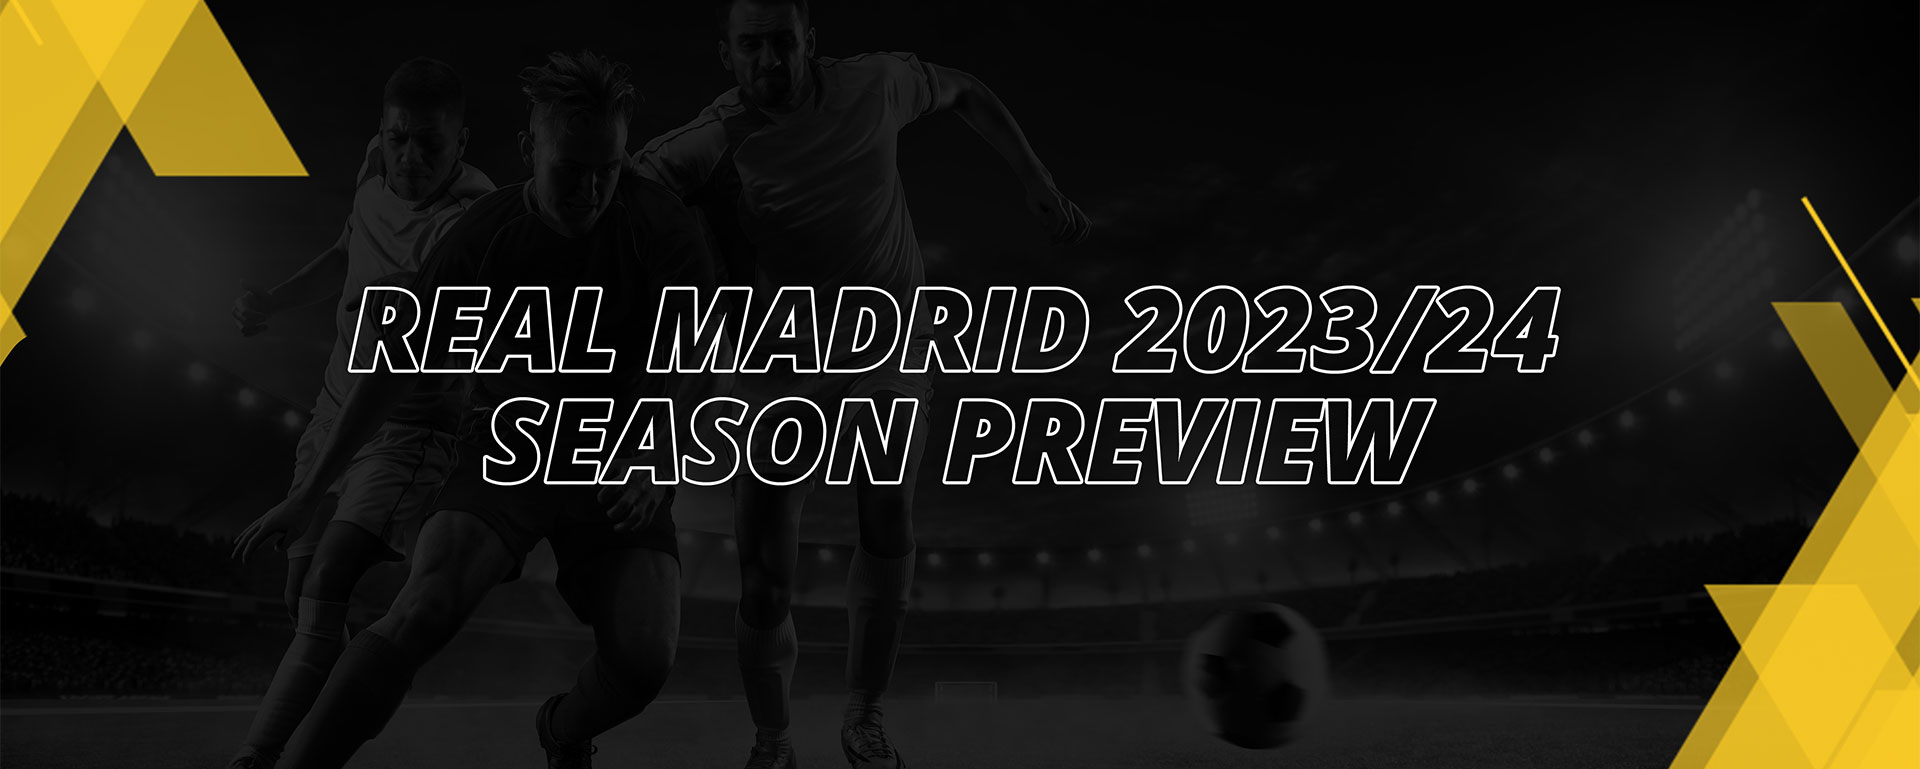 REAL MADRID 2023/24 SEASON PREVIEW